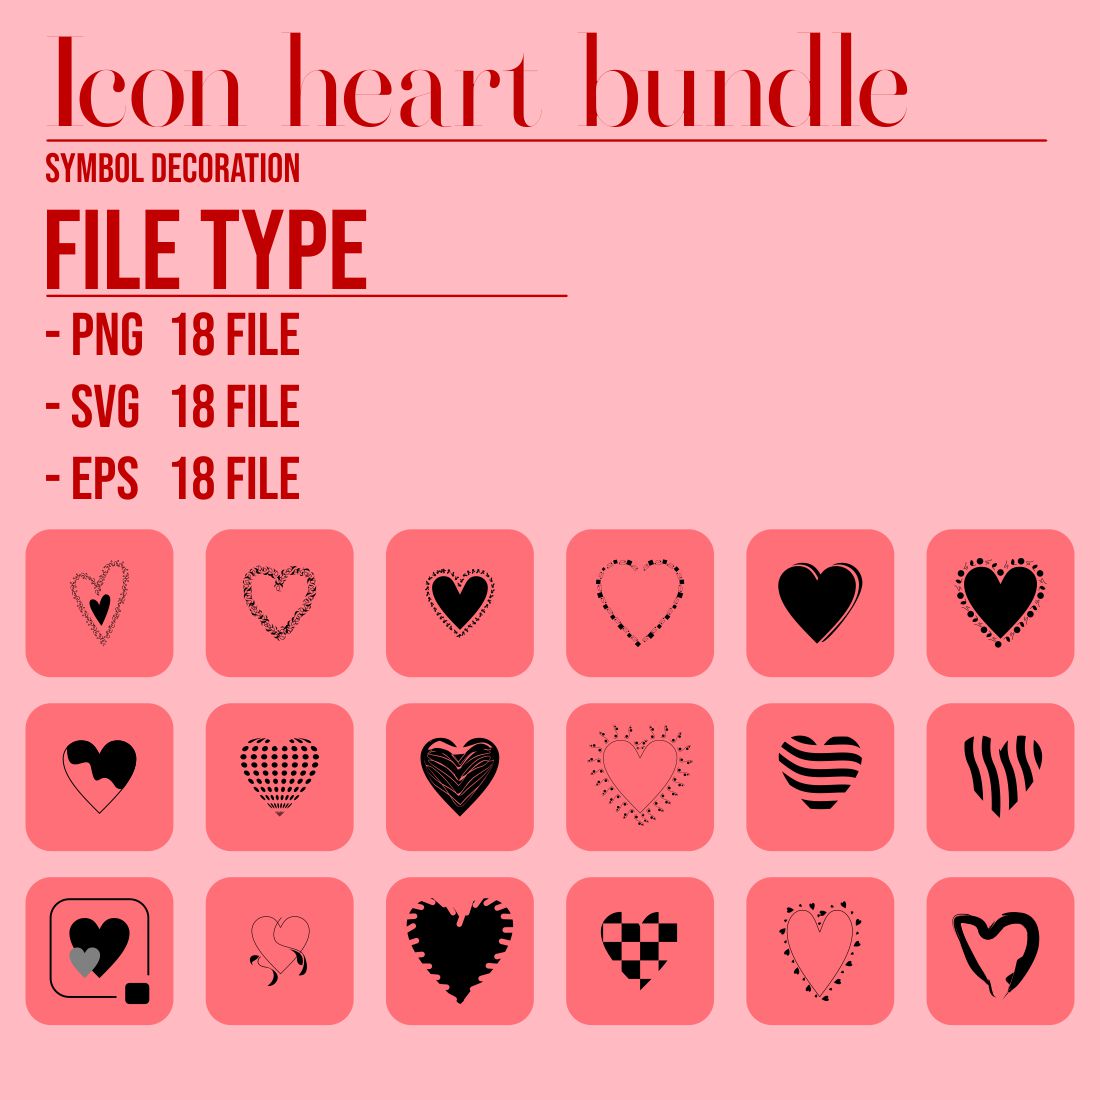 Icon Heart Symbol Decoration Flat Design cover image.